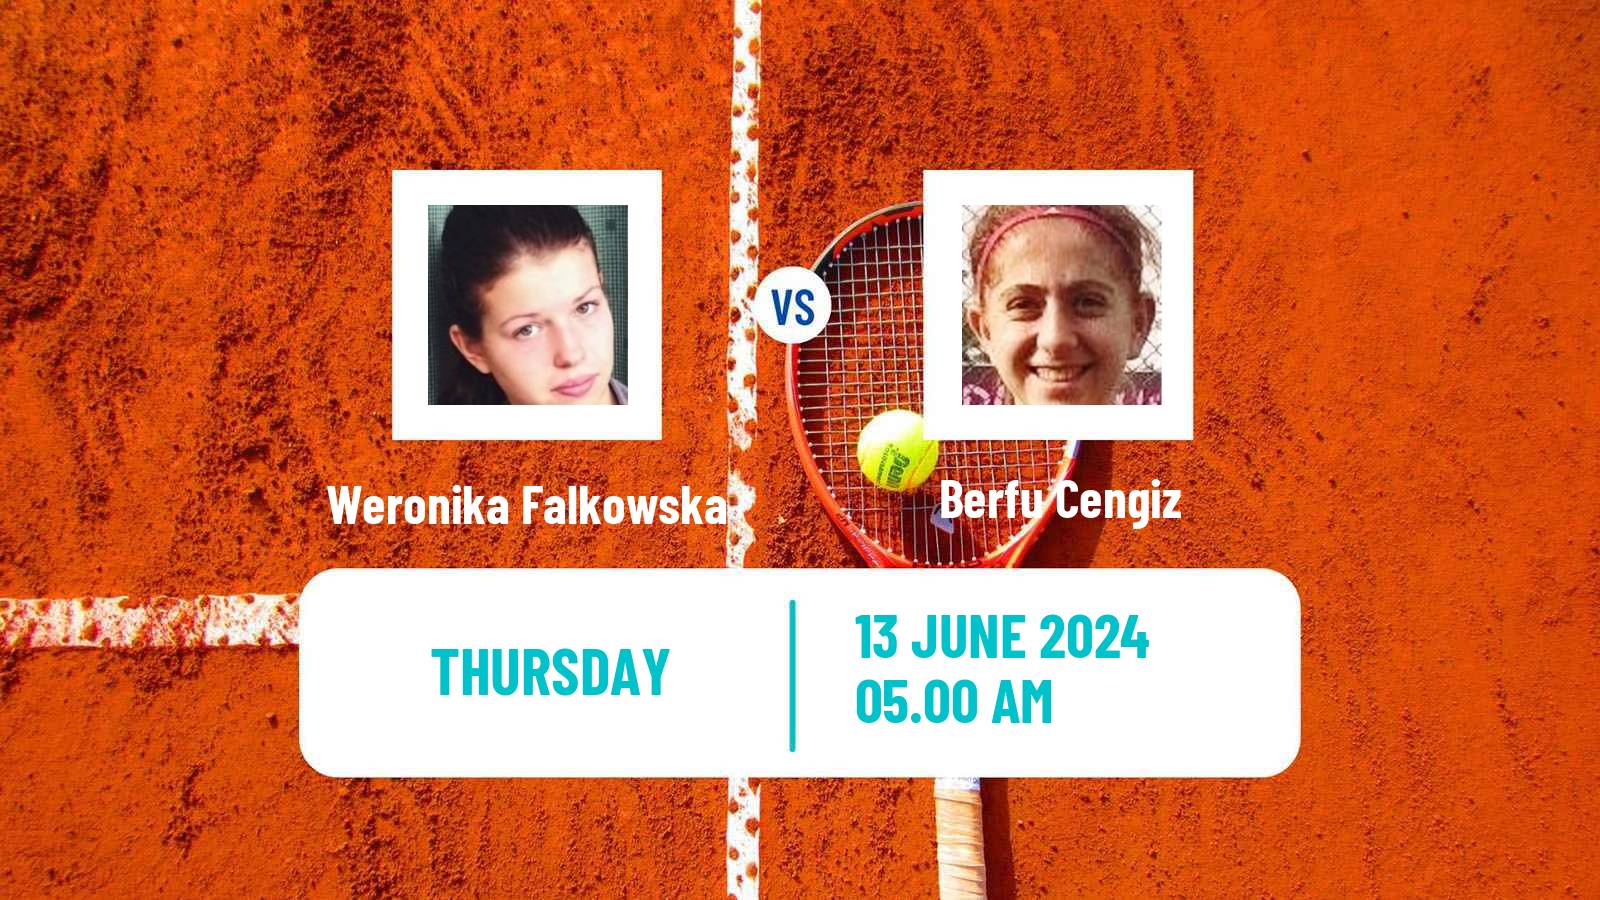 Tennis ITF W35 Gdansk Women Weronika Falkowska - Berfu Cengiz